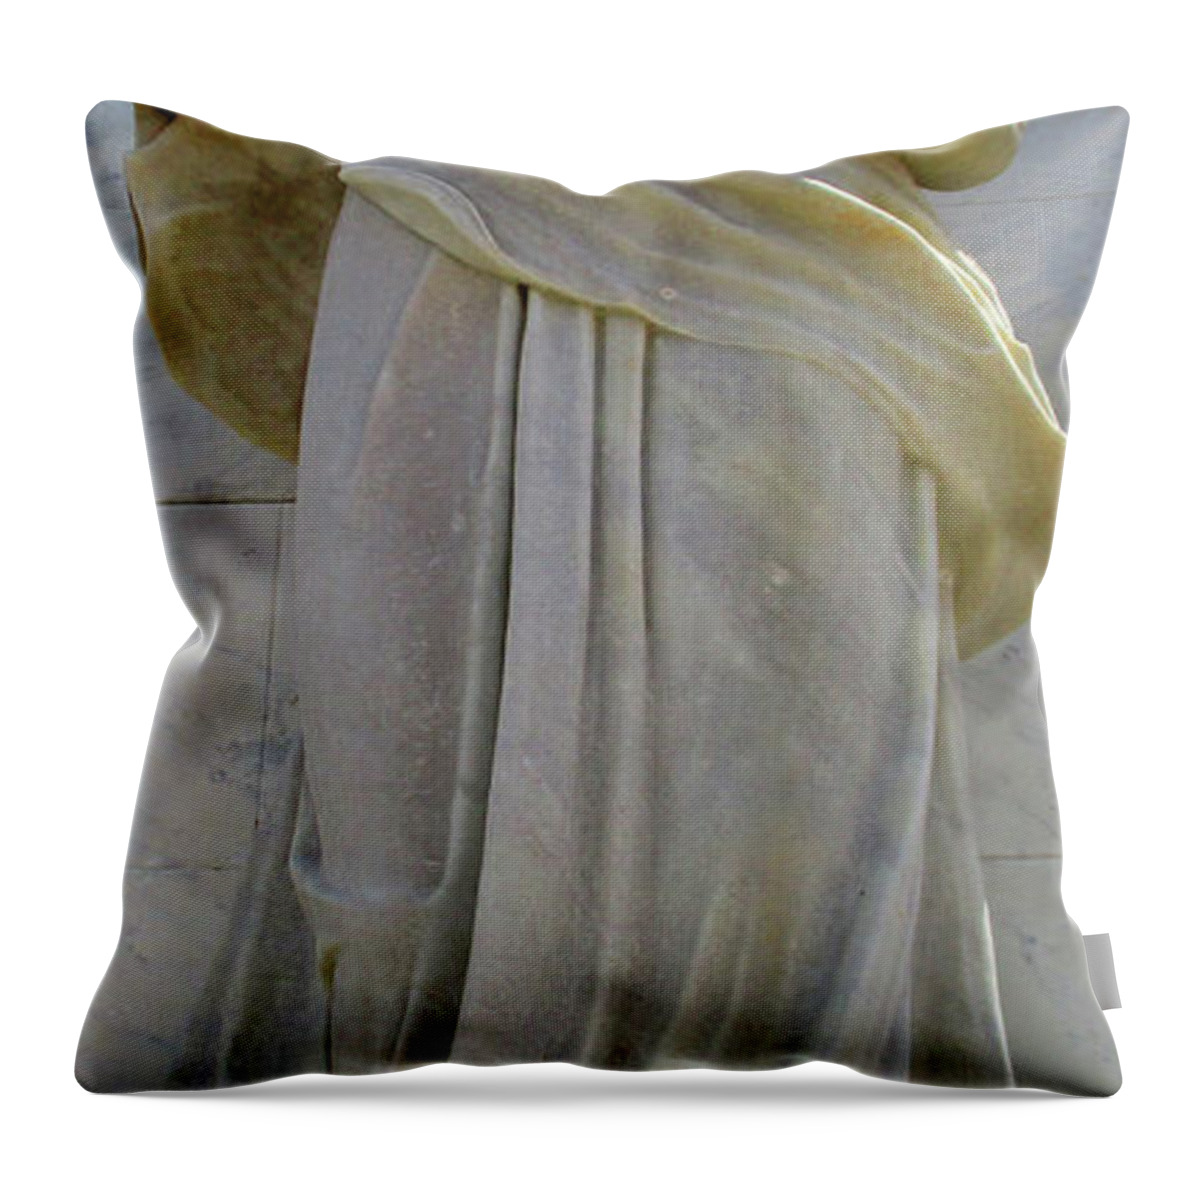 Cartagena Throw Pillow featuring the photograph Cartagena Sculpture 10 by Randall Weidner